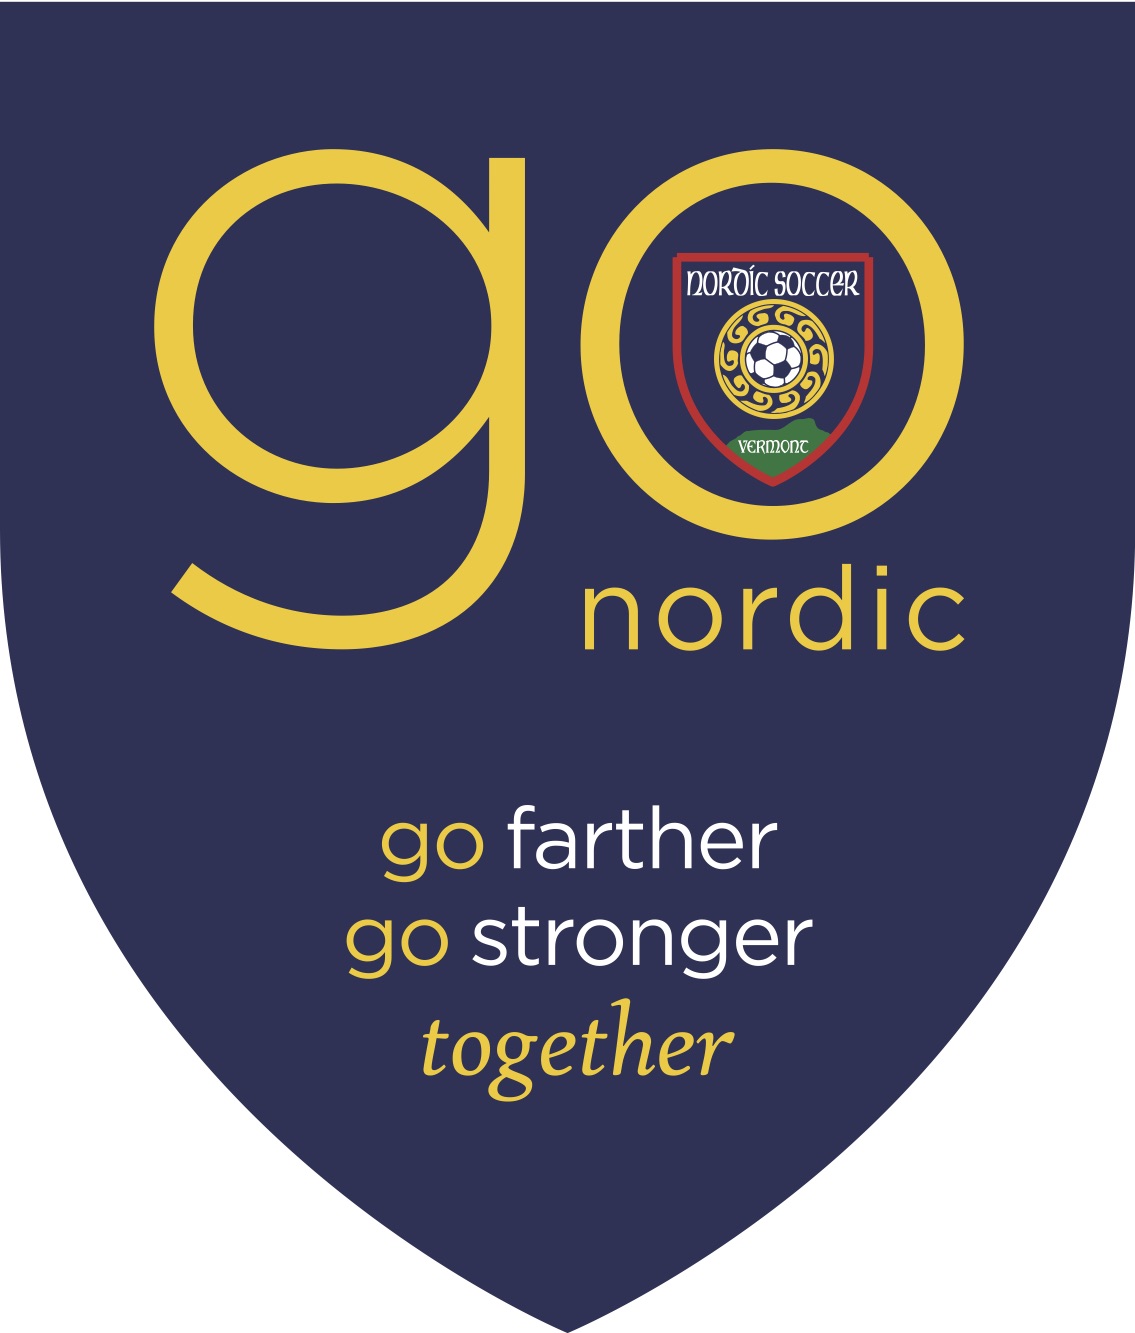 Previous GO Nordic Events